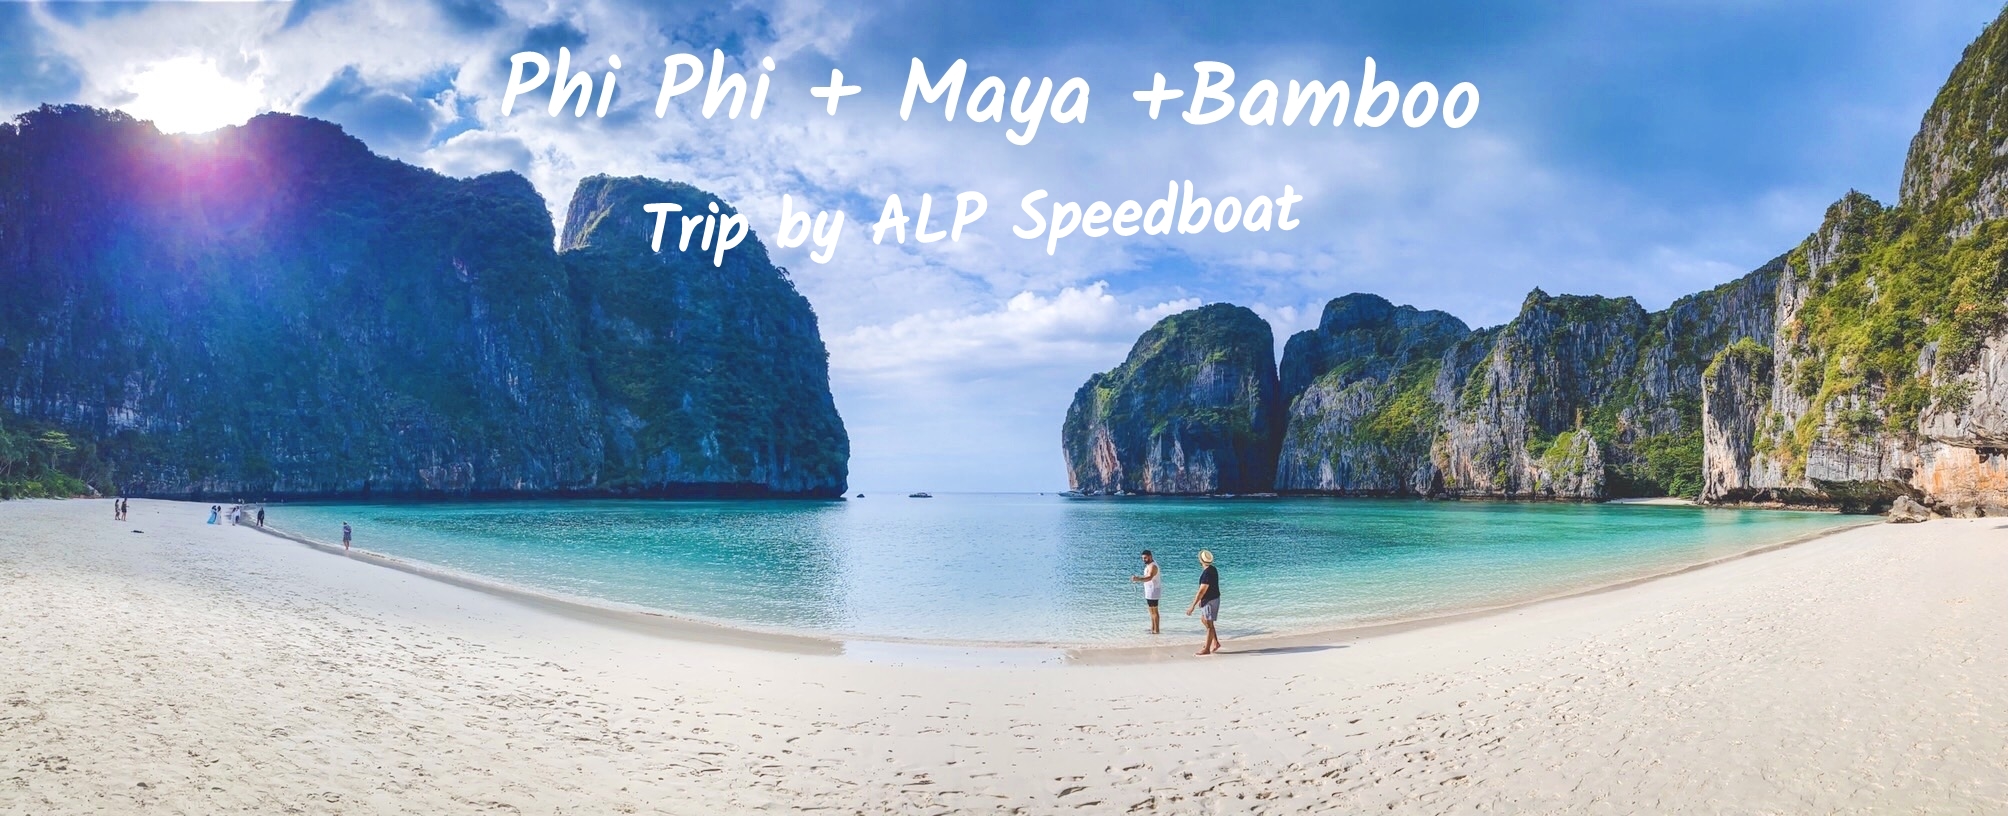 PHI PHI + MAYA + BAMBOO ISLAND DAY TRIP BY SPEEDBOAT